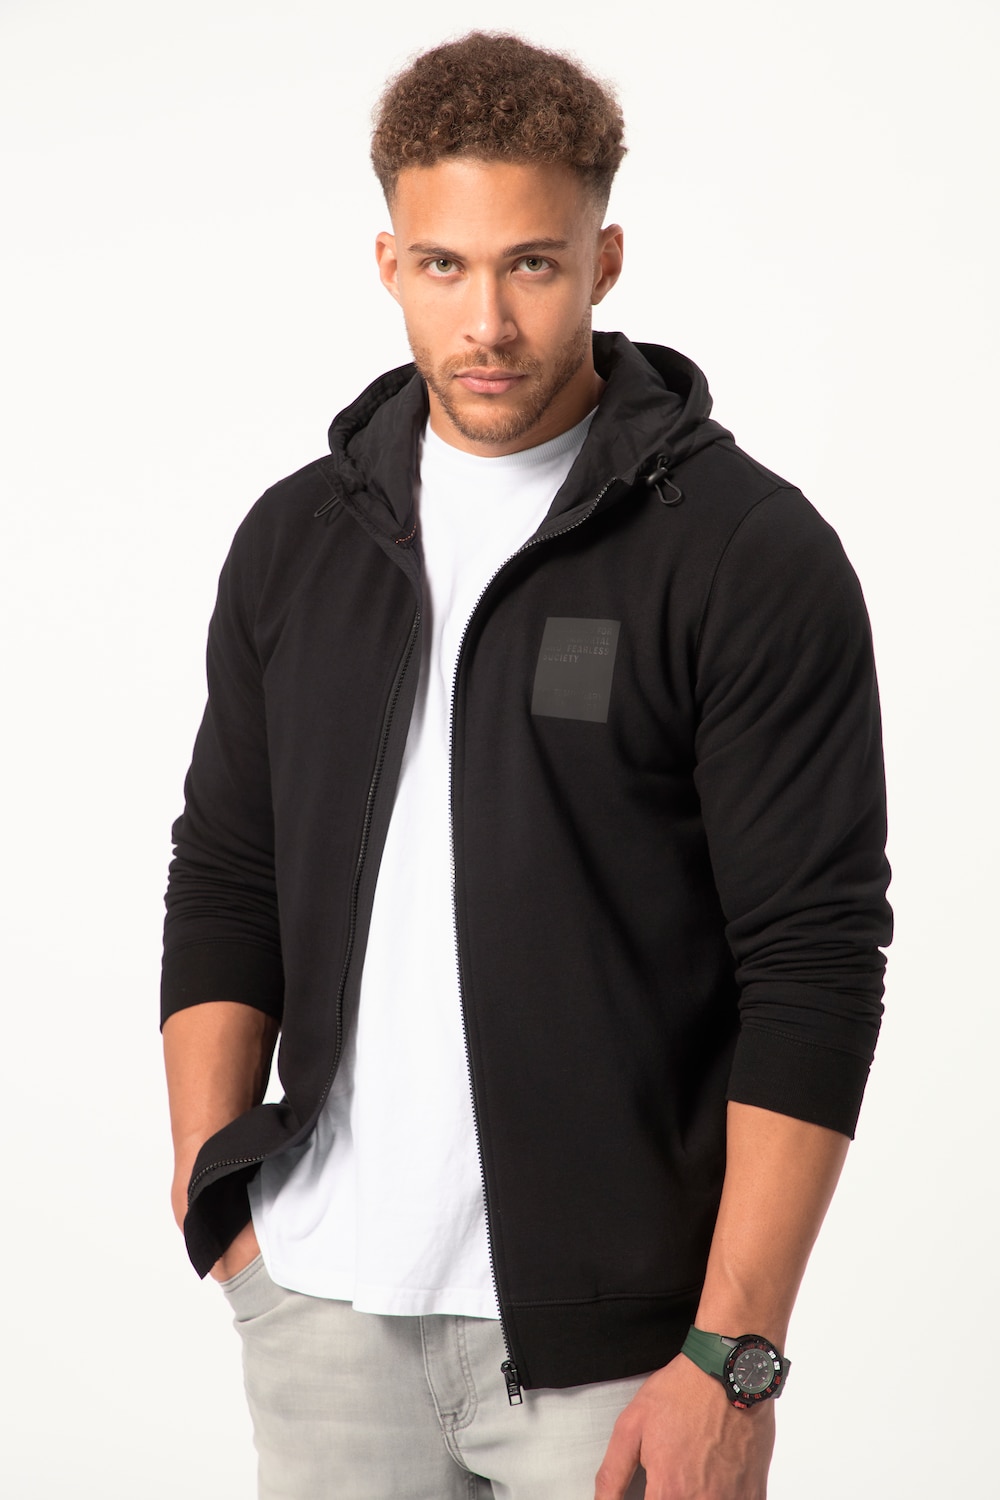 Grote Maten STHUGE hoodie-jackmale, zwart, Maat: XXL, Katoen/Polyester, STHUGE